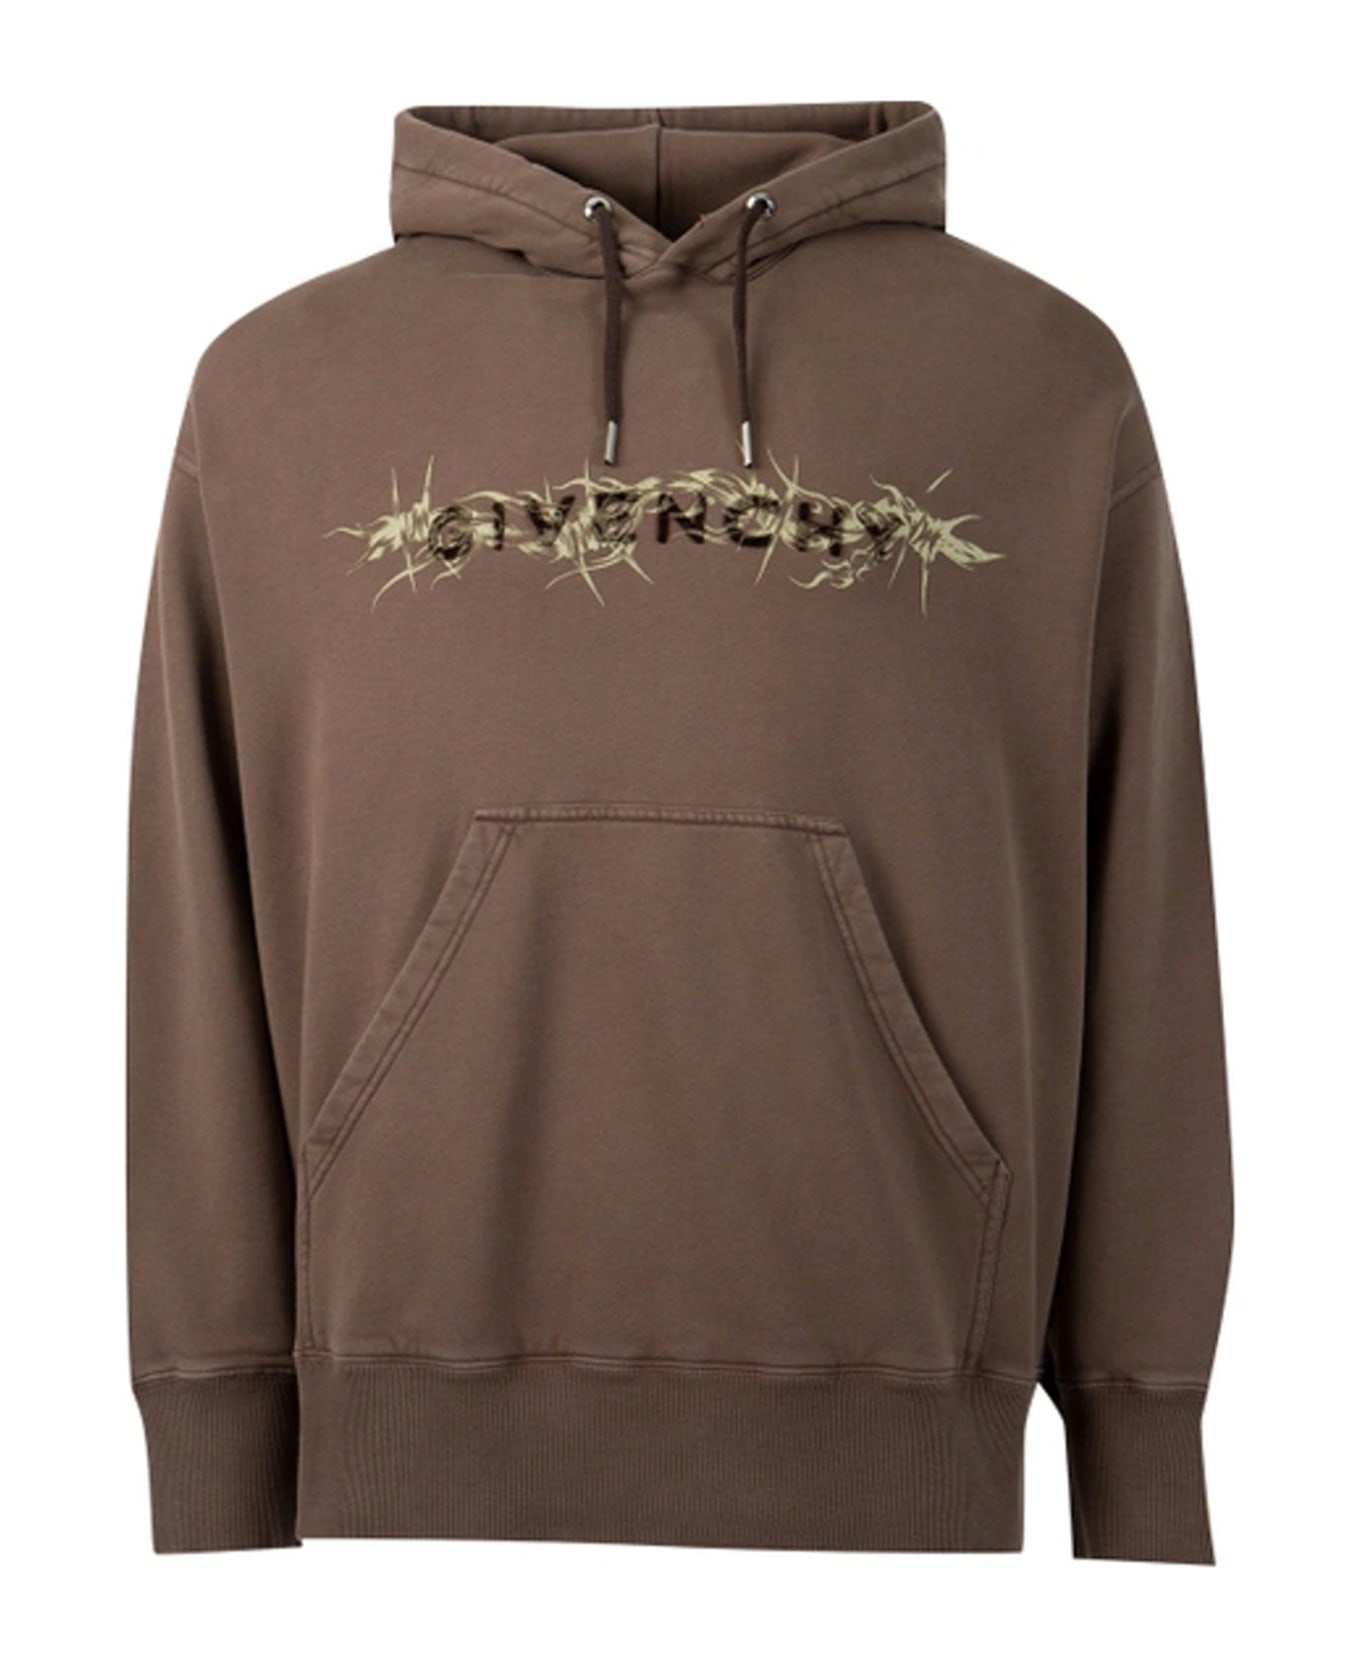 Givenchy Logo Hooded Sweatshirt - Brown